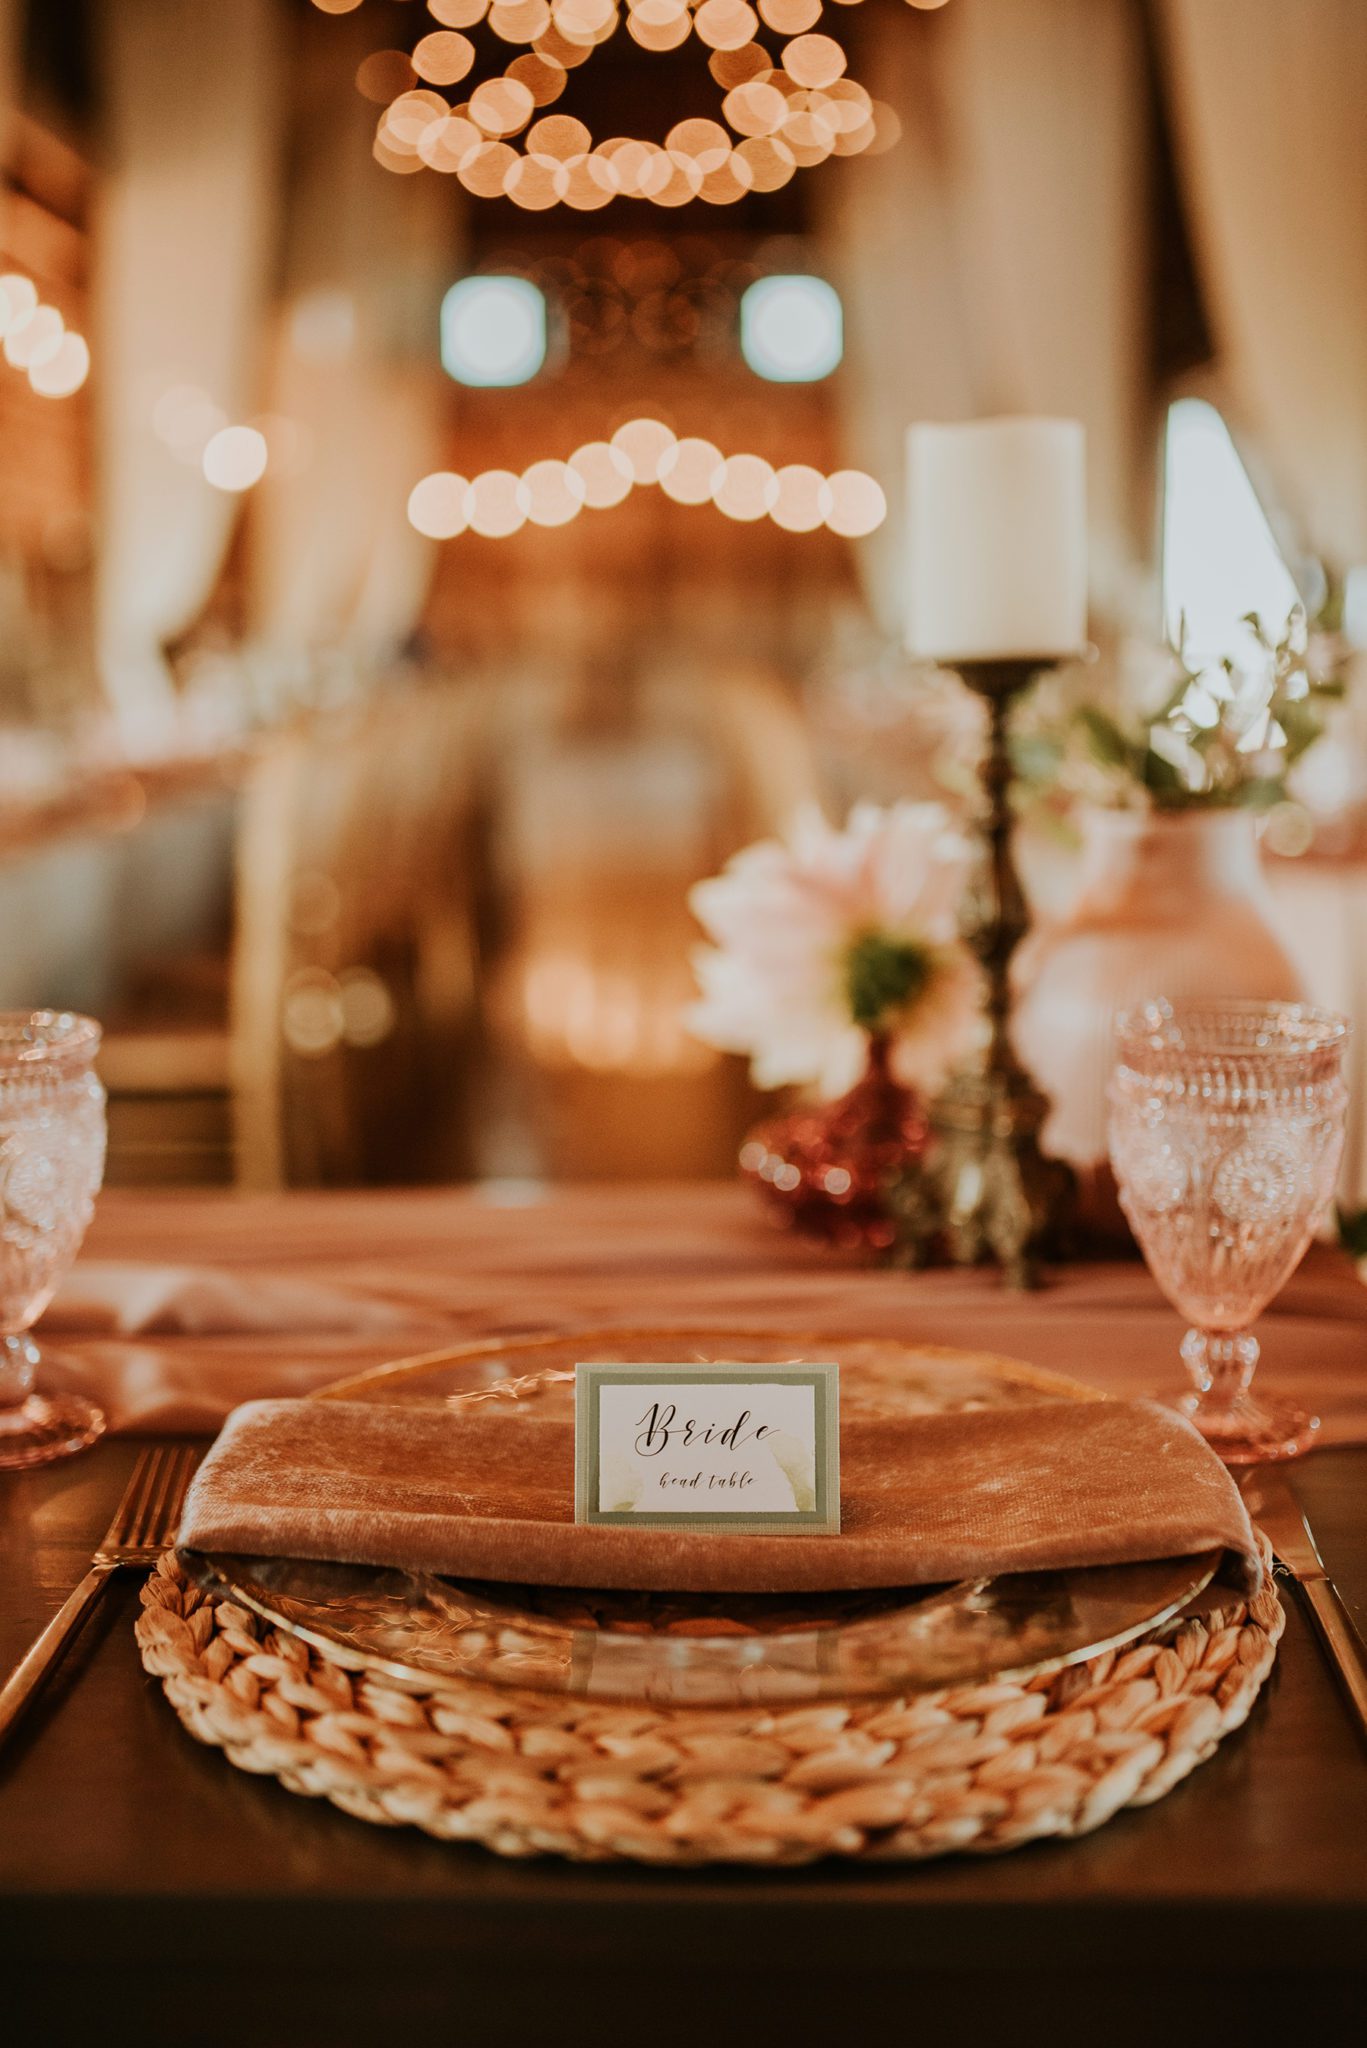 Western wedding table settings for a lavish reception